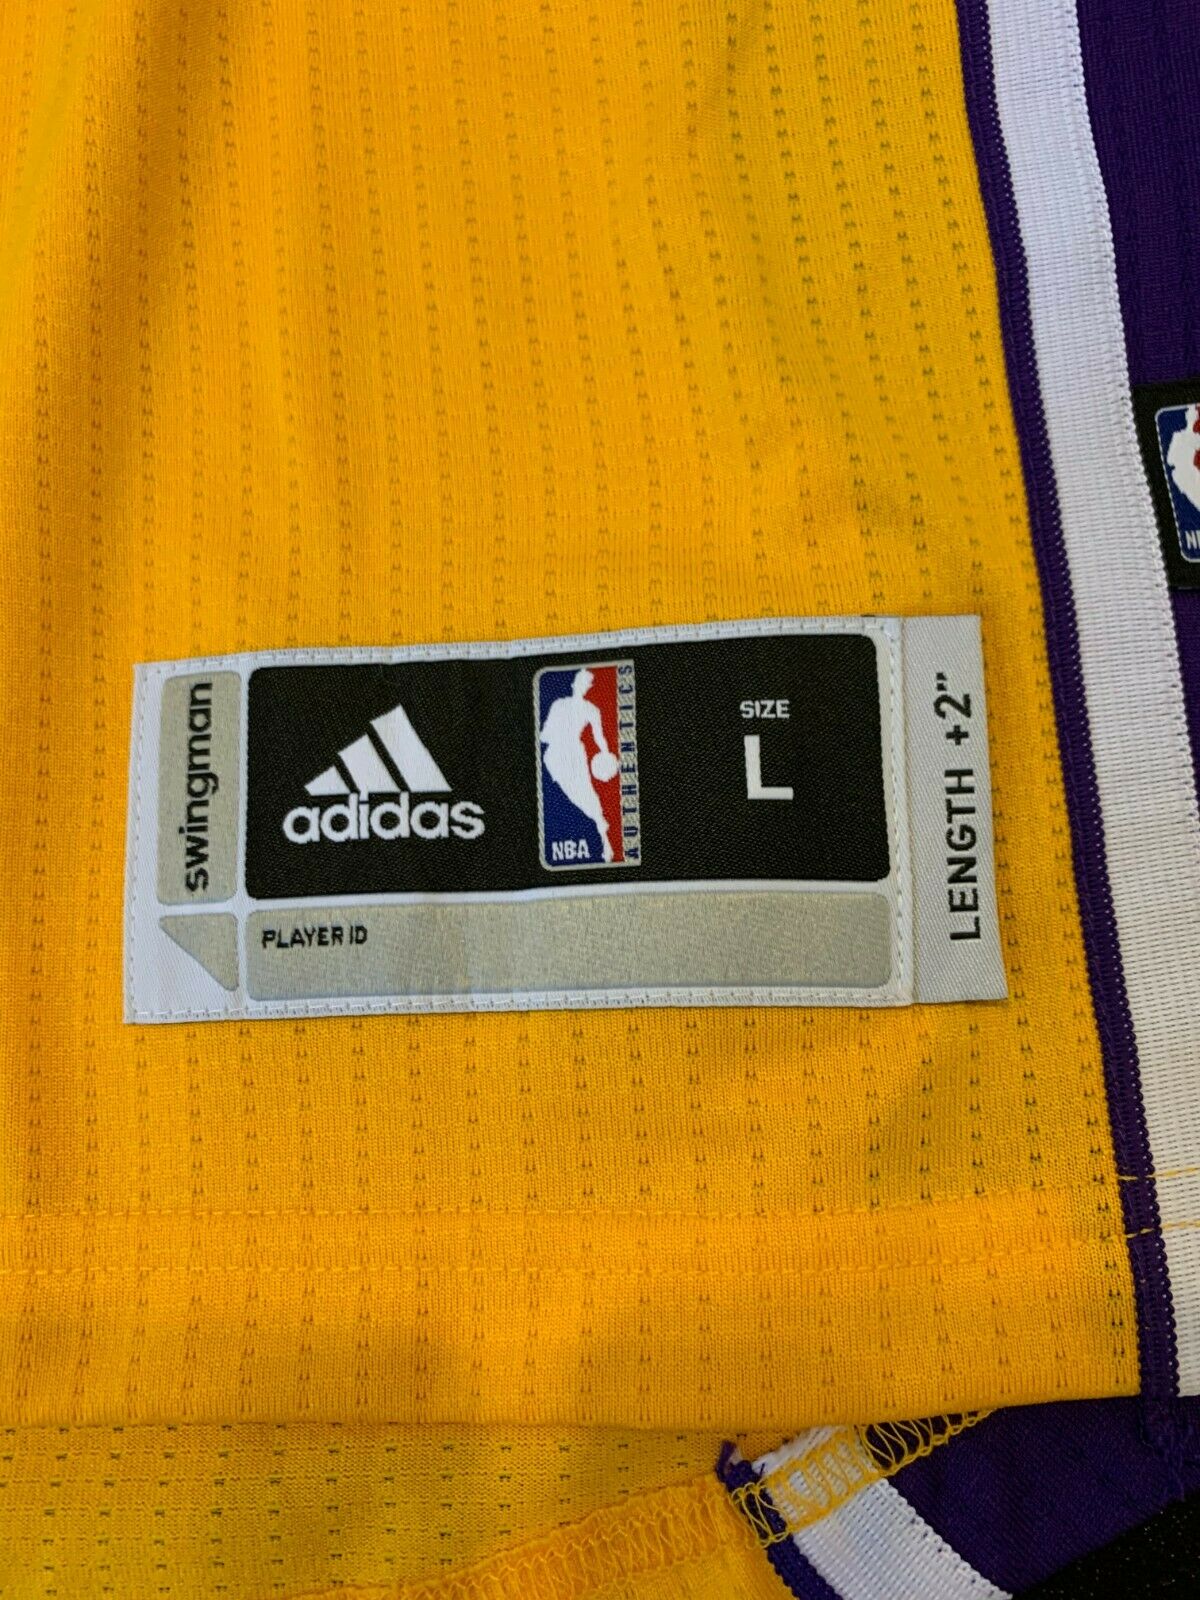 Kobe Bryant #24 Los Angeles Lakers Adidas White Autographed Jersey Youth  MEDIUM